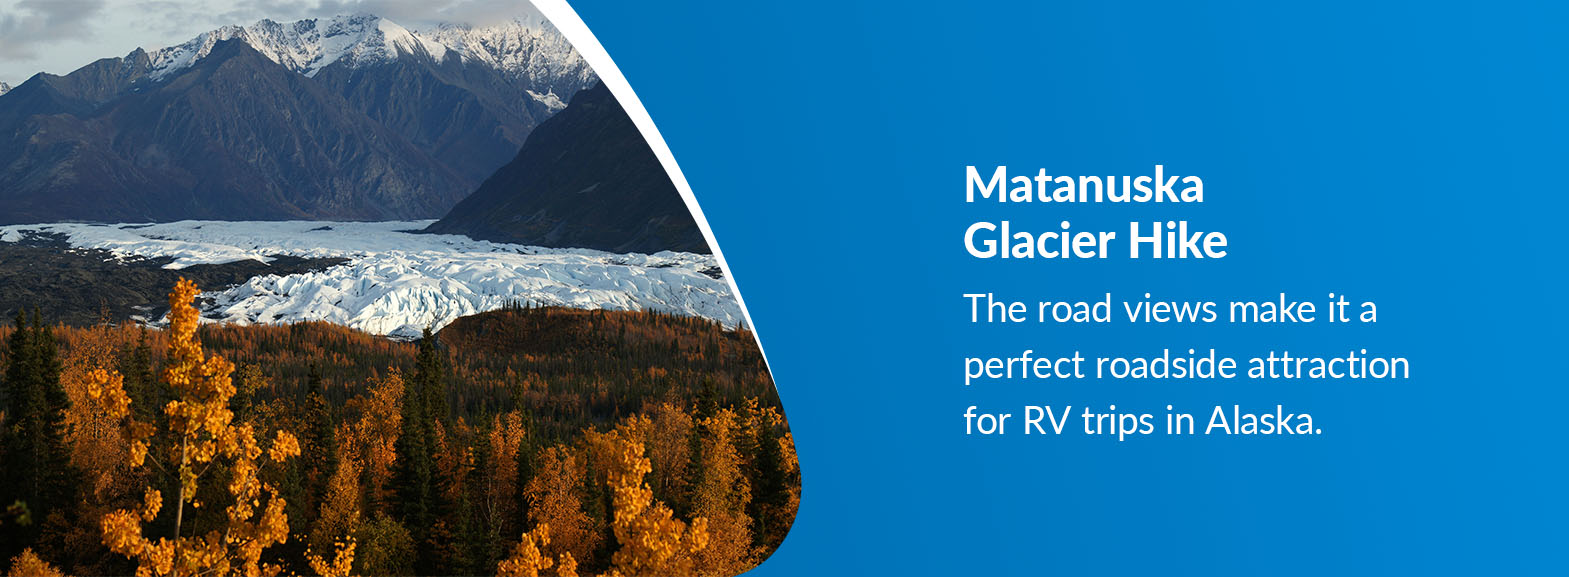 Matanuska Glacier Hike - The road views make it a perfect roadside attraction for RV trips in Alaska.